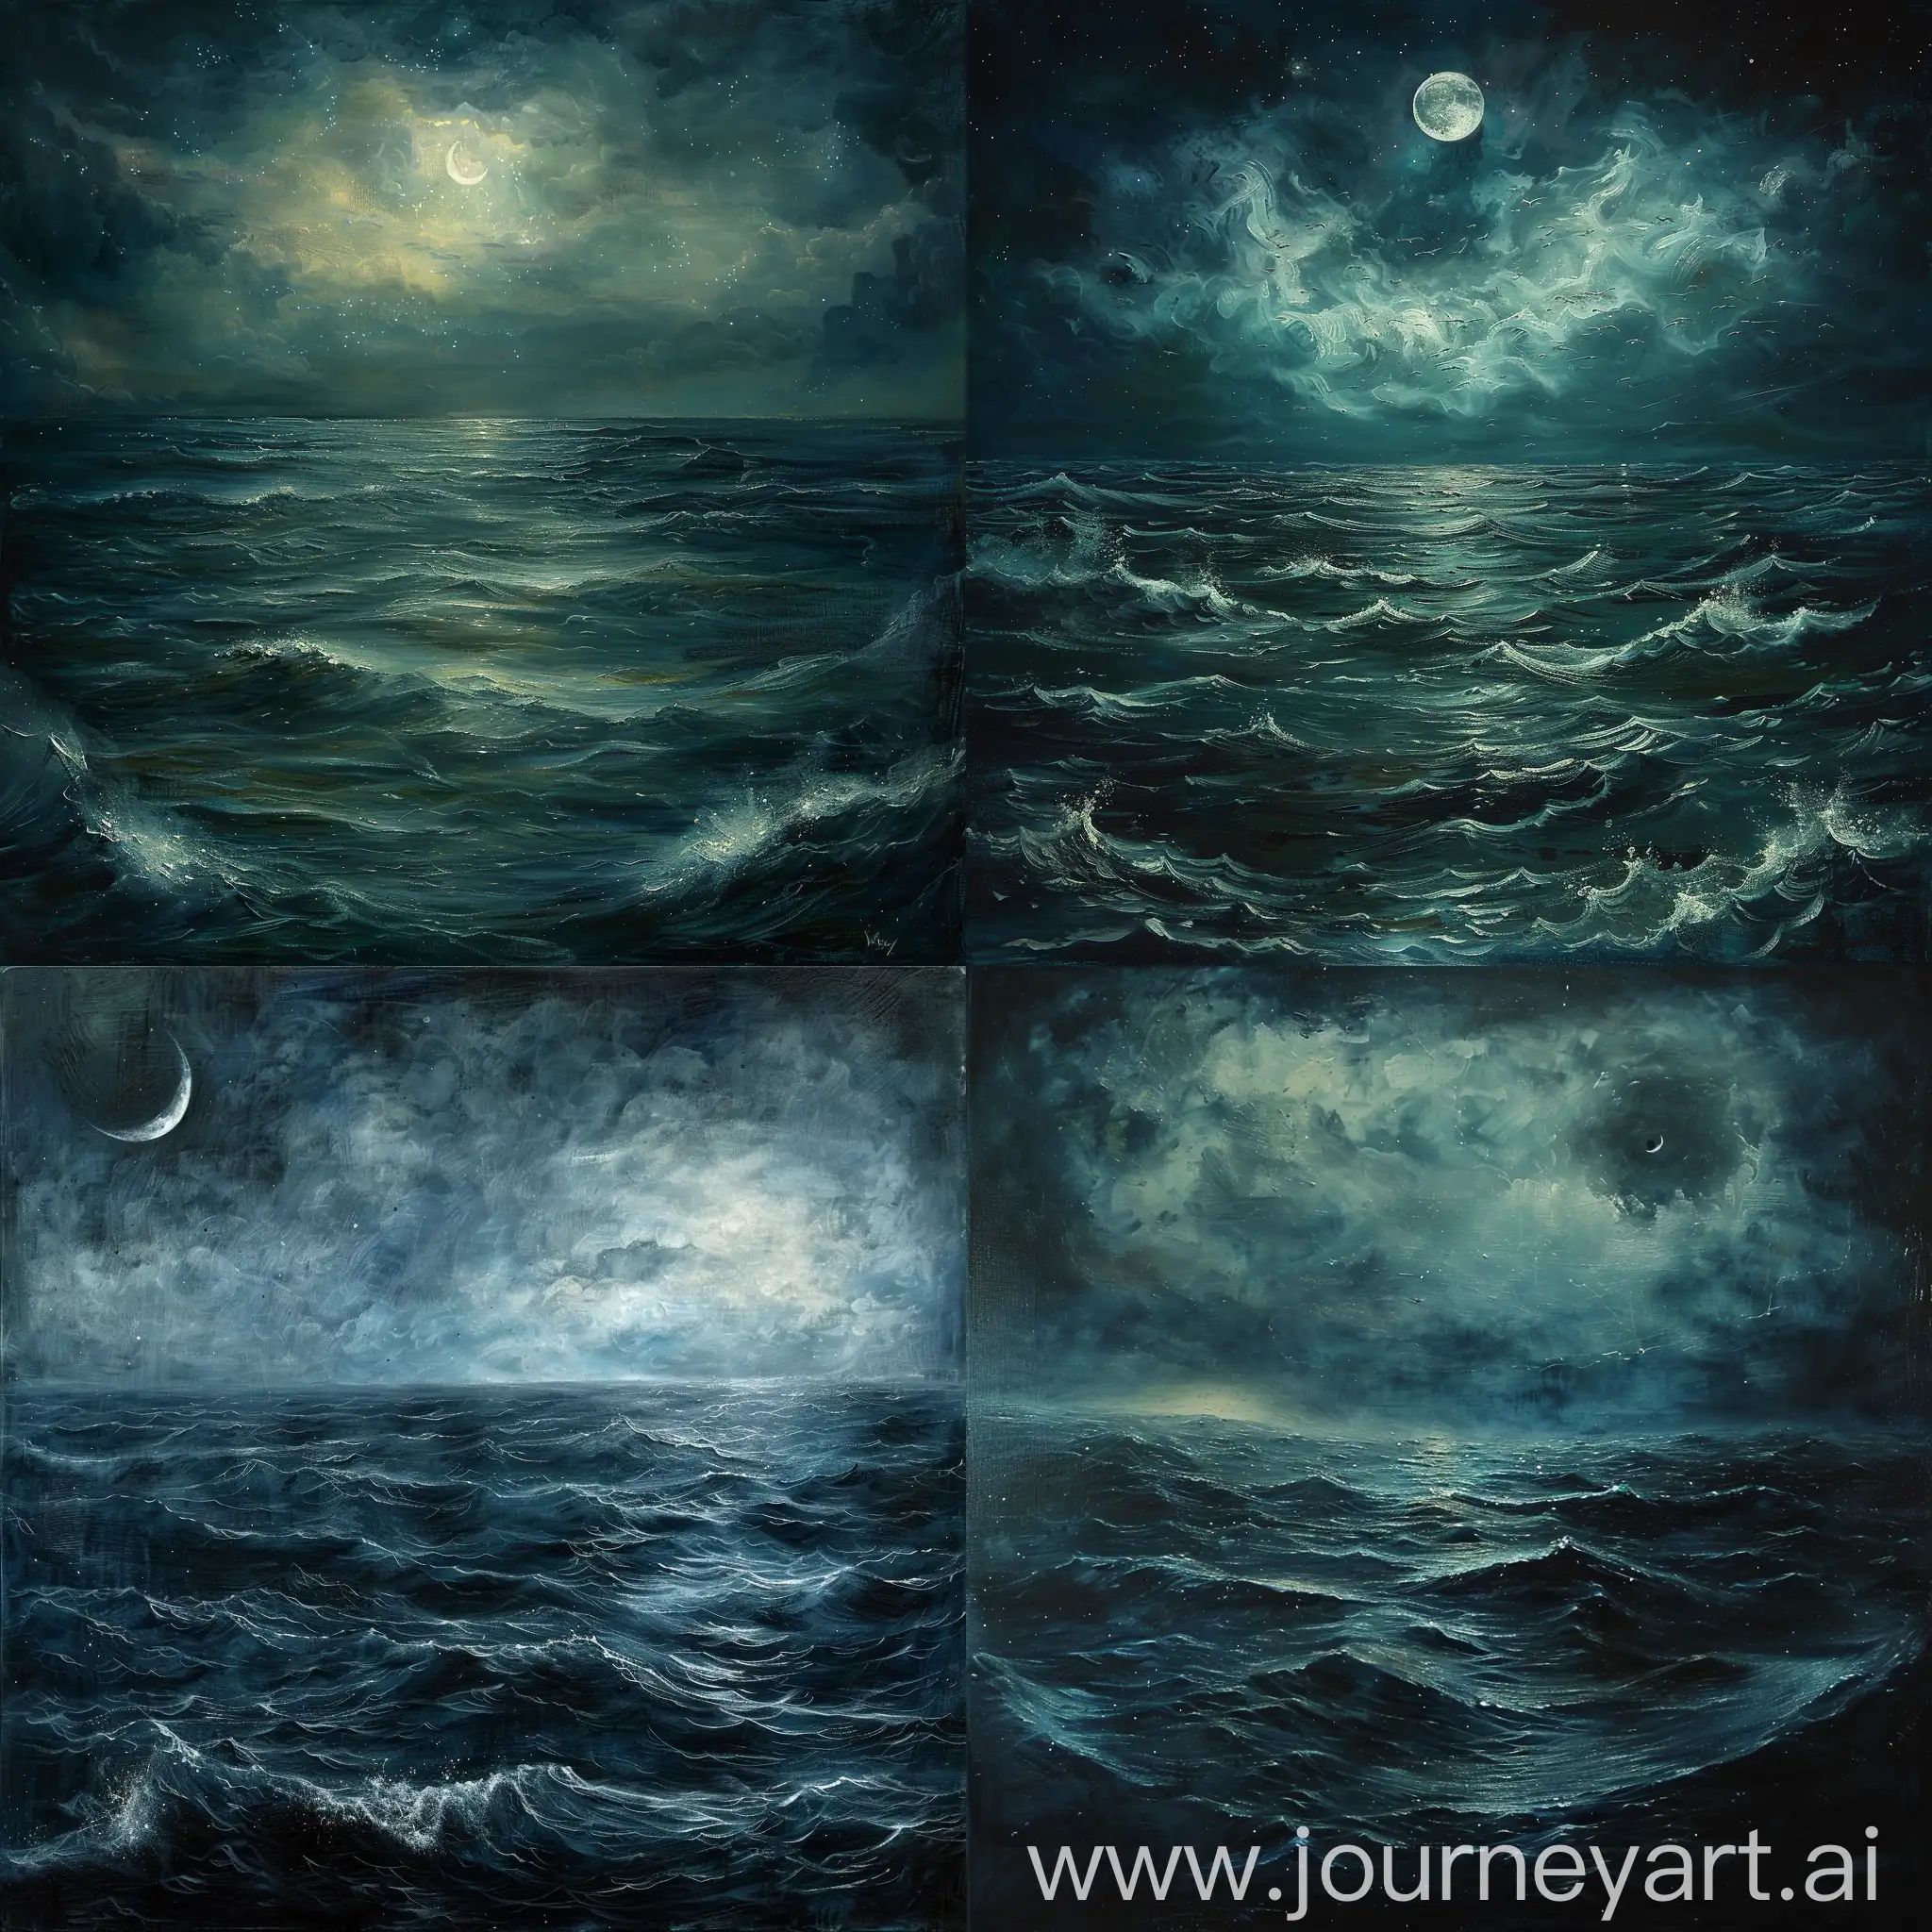 Slightly-Serene-Nightmarish-Night-Sea-CD-Cover-Art